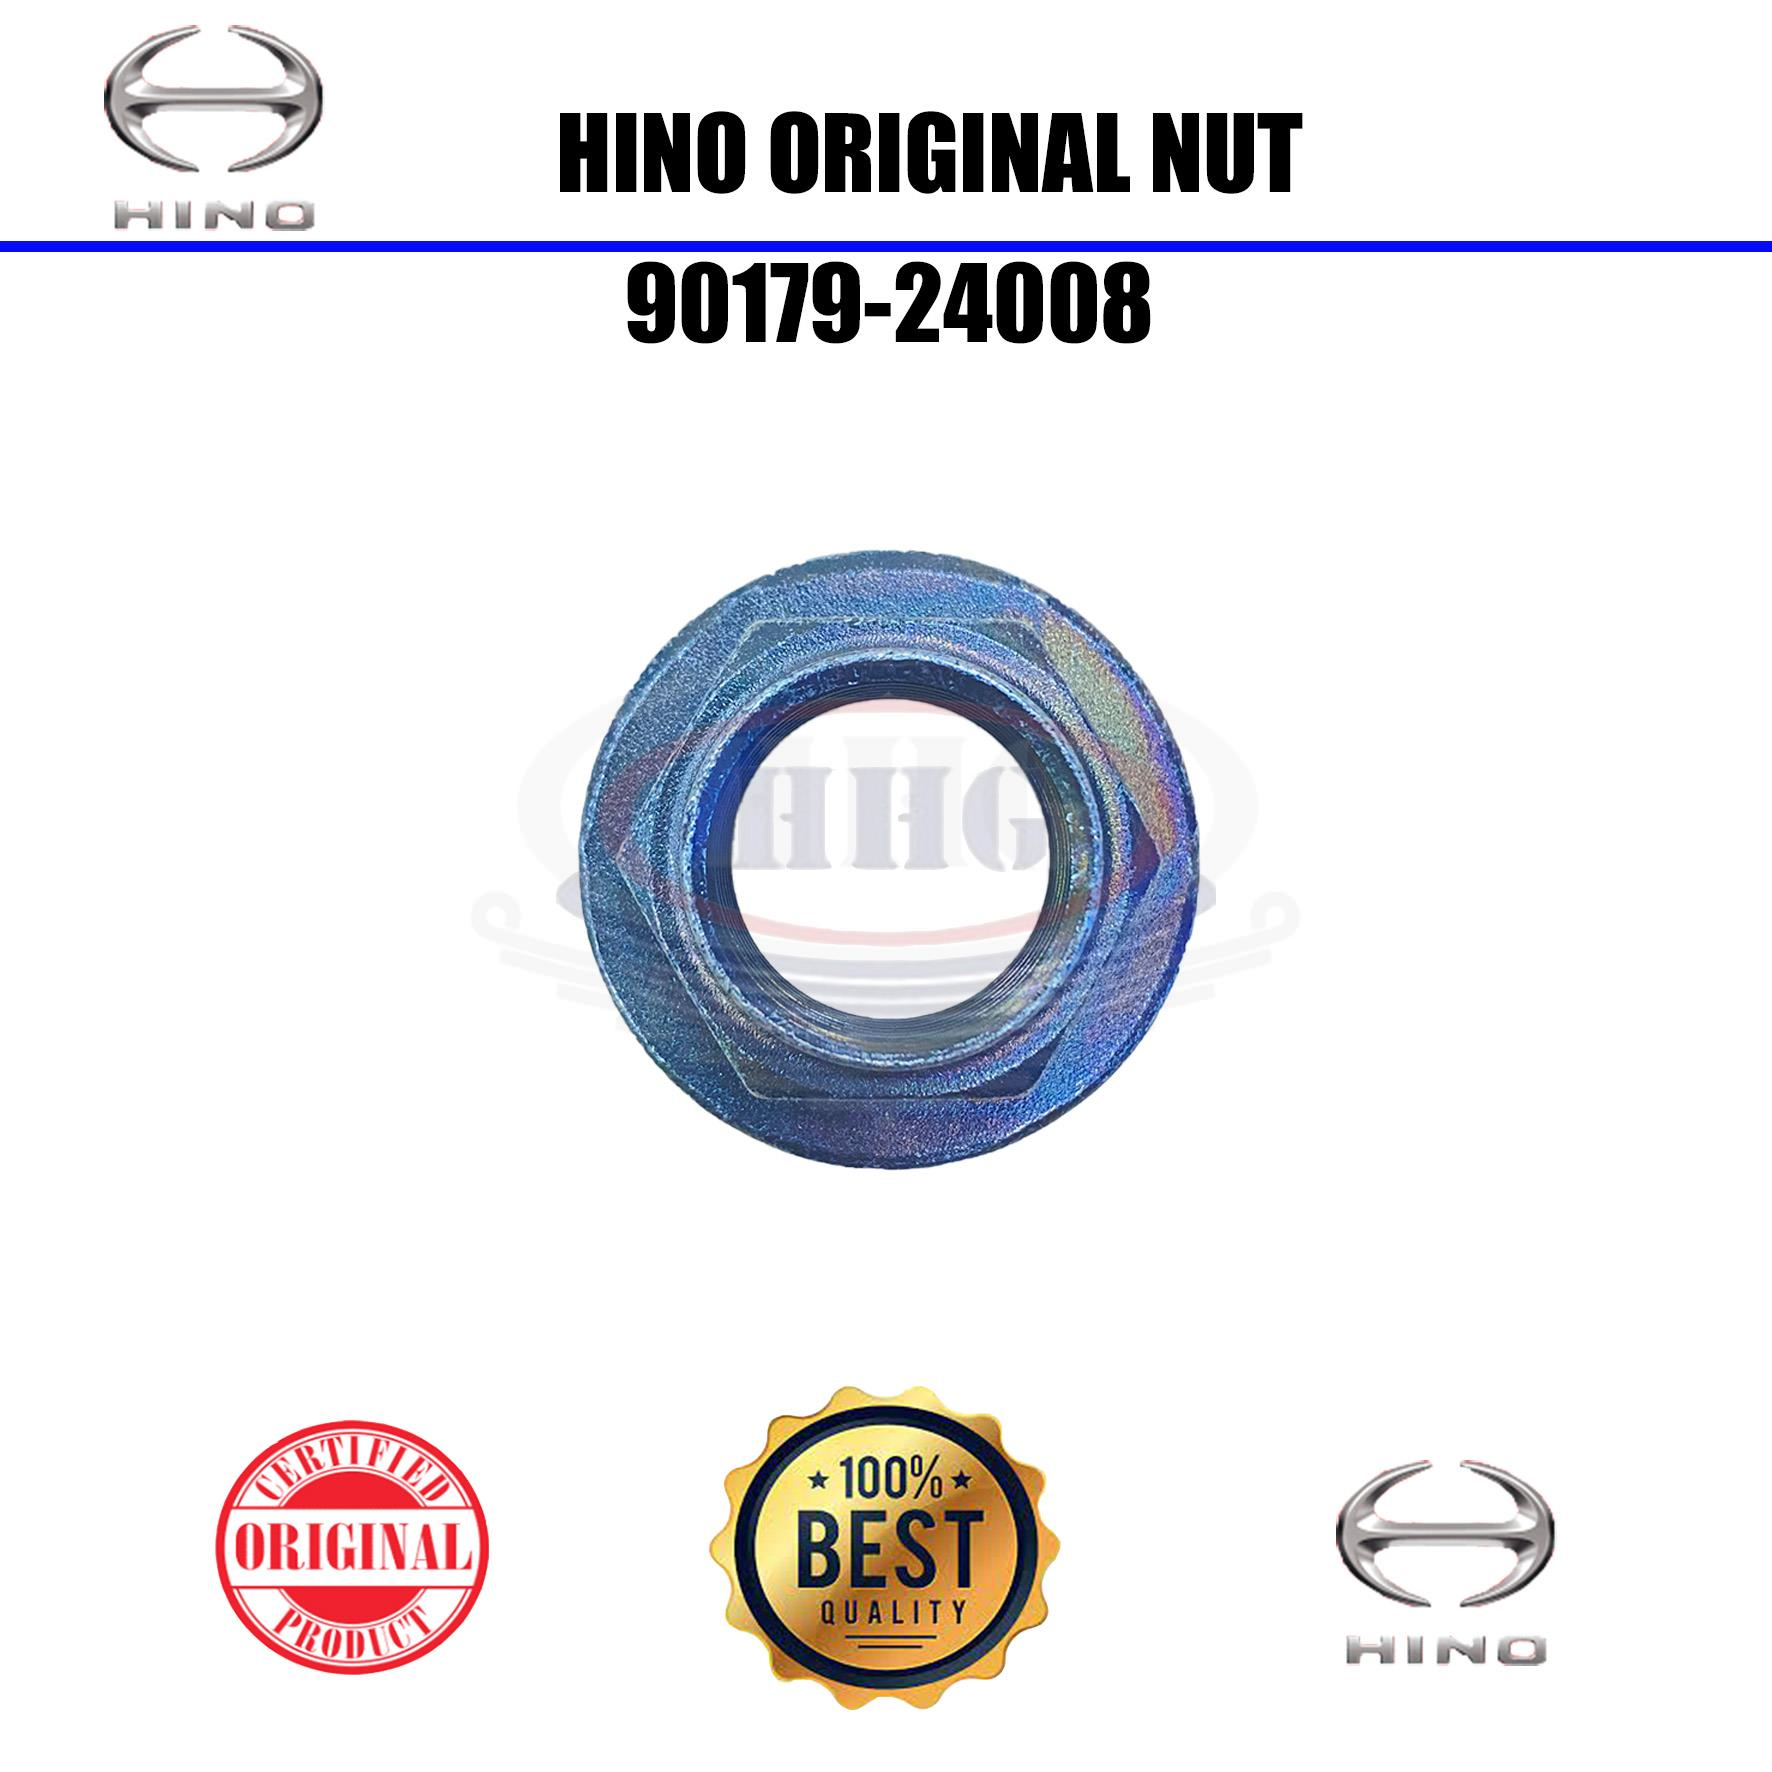 Hino Original Main Shaft Nut (90179-24008)